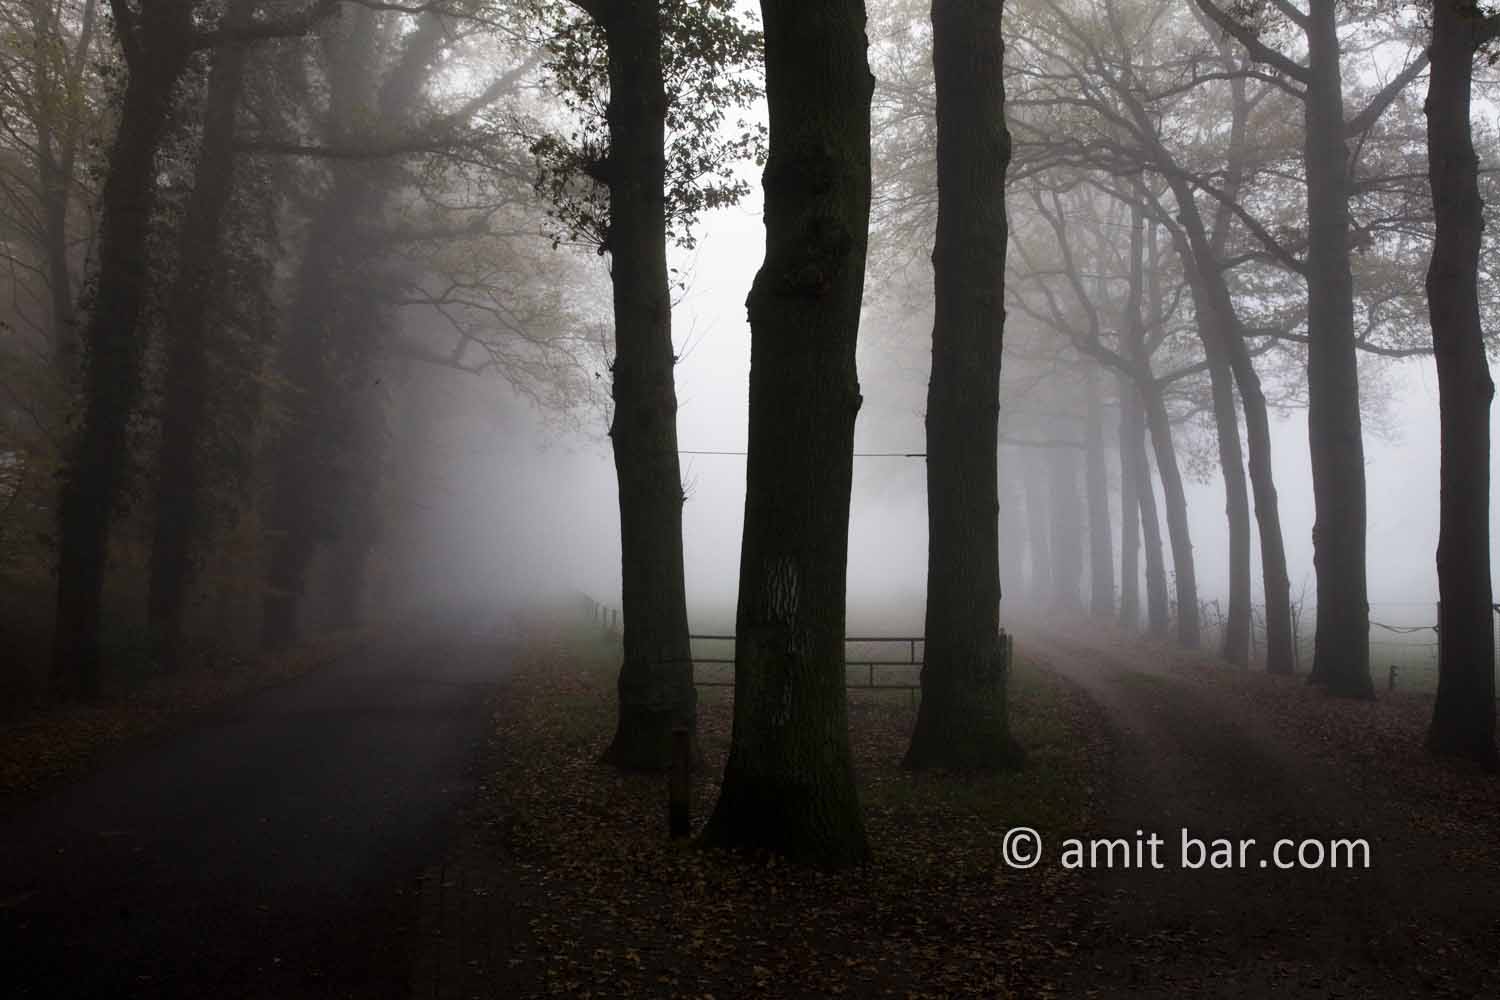 Misty roads: Misty roads with three oak trees in Doetinchem, The Netherlands